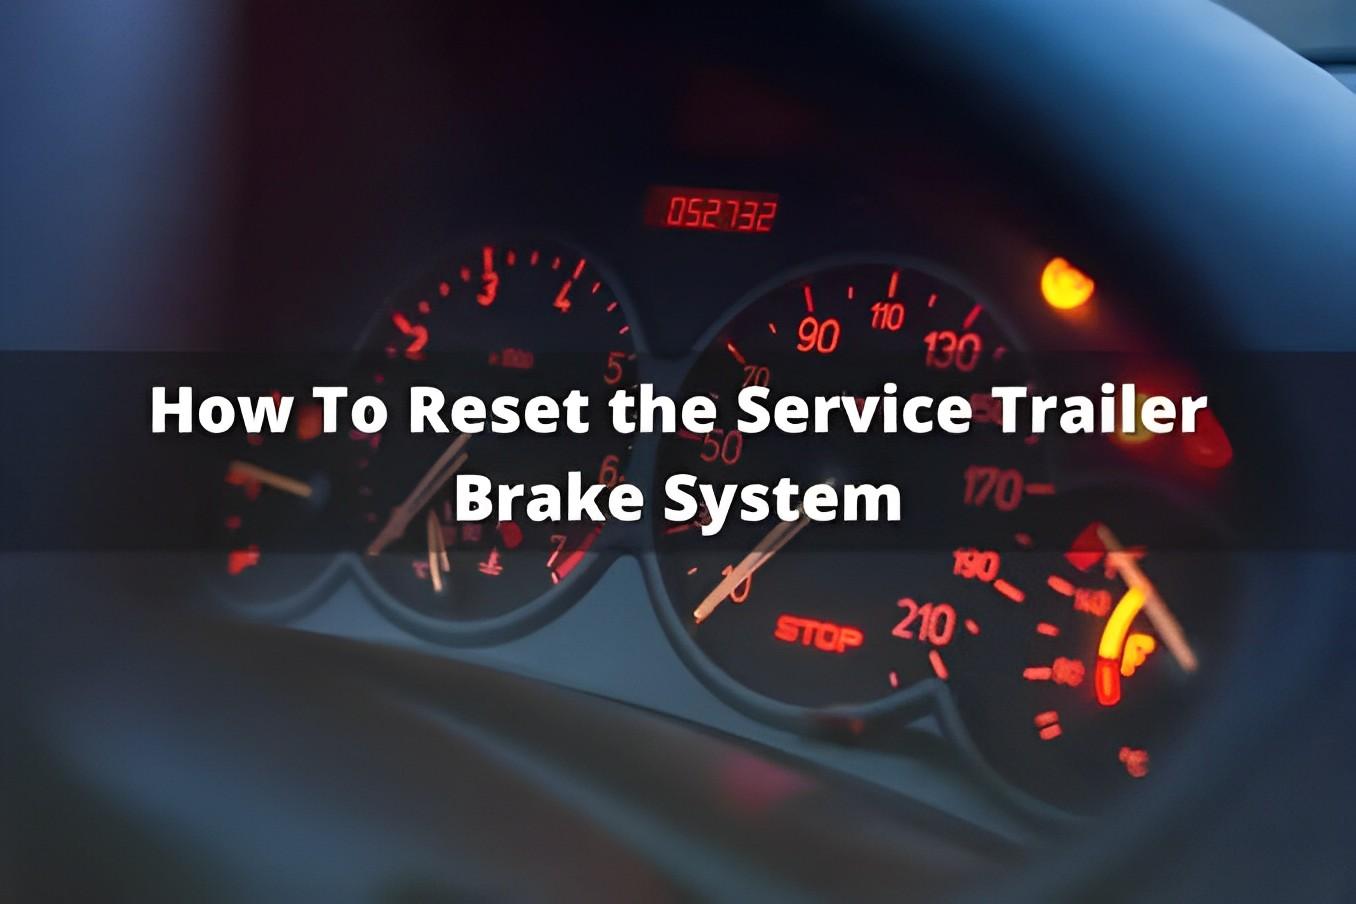 Service Trailer Brake System